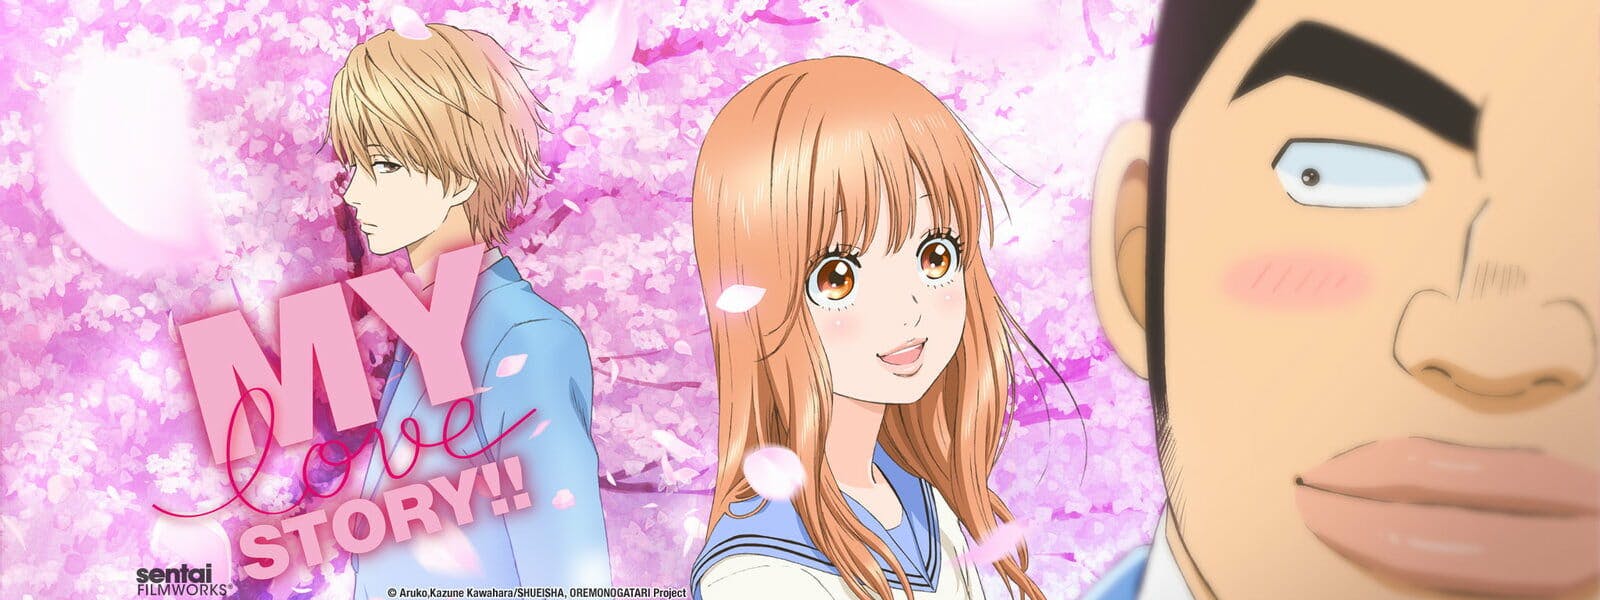 romance anime my love story